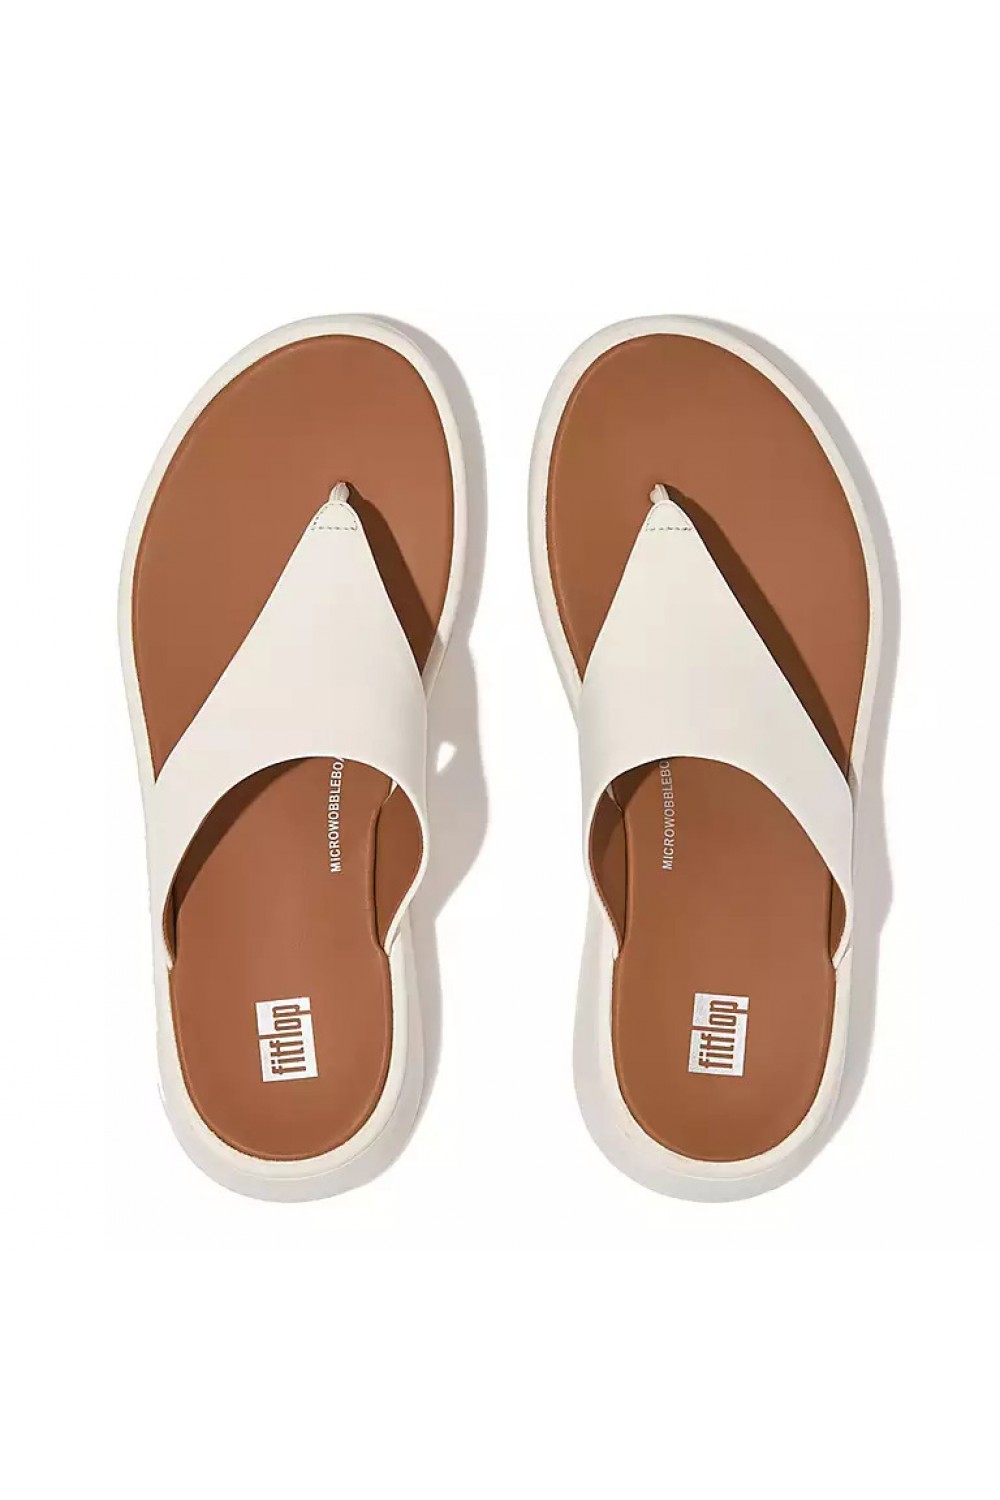 Fitflop F-MODE Leather Flatform Toe-Post Sandals Cream